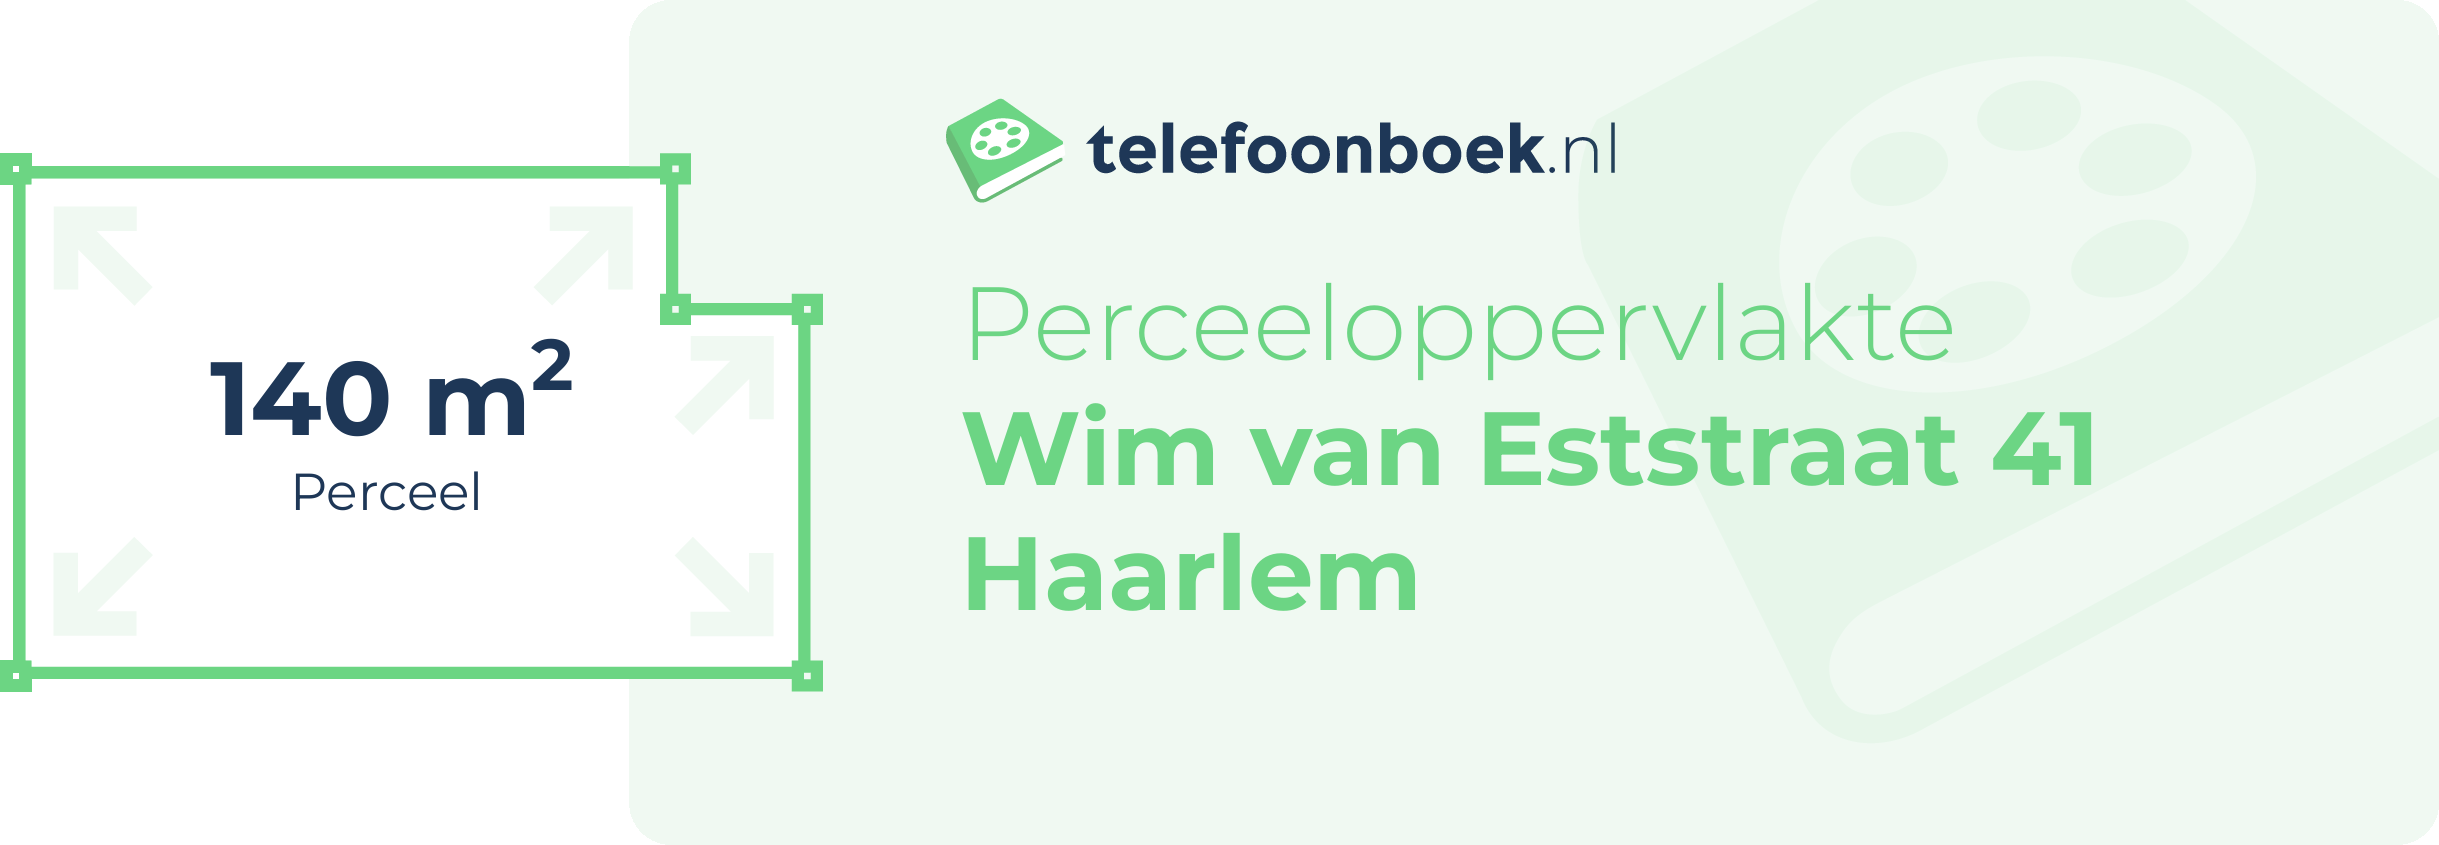 Perceeloppervlakte Wim Van Eststraat 41 Haarlem